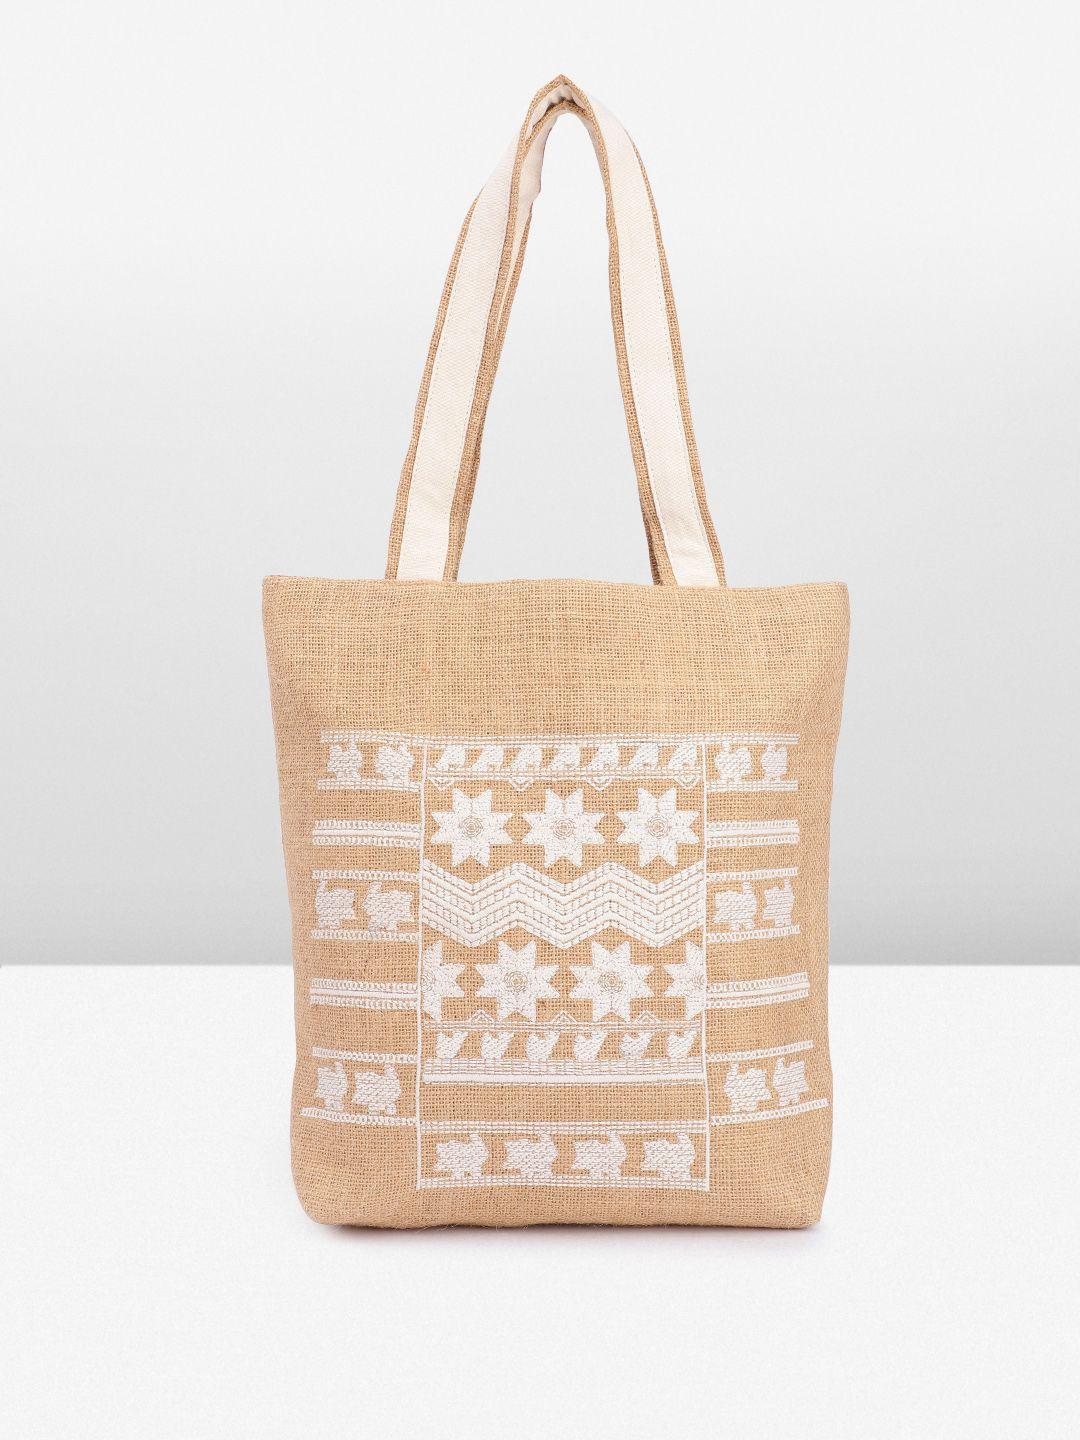 taavi woven design textured shopper tote bag